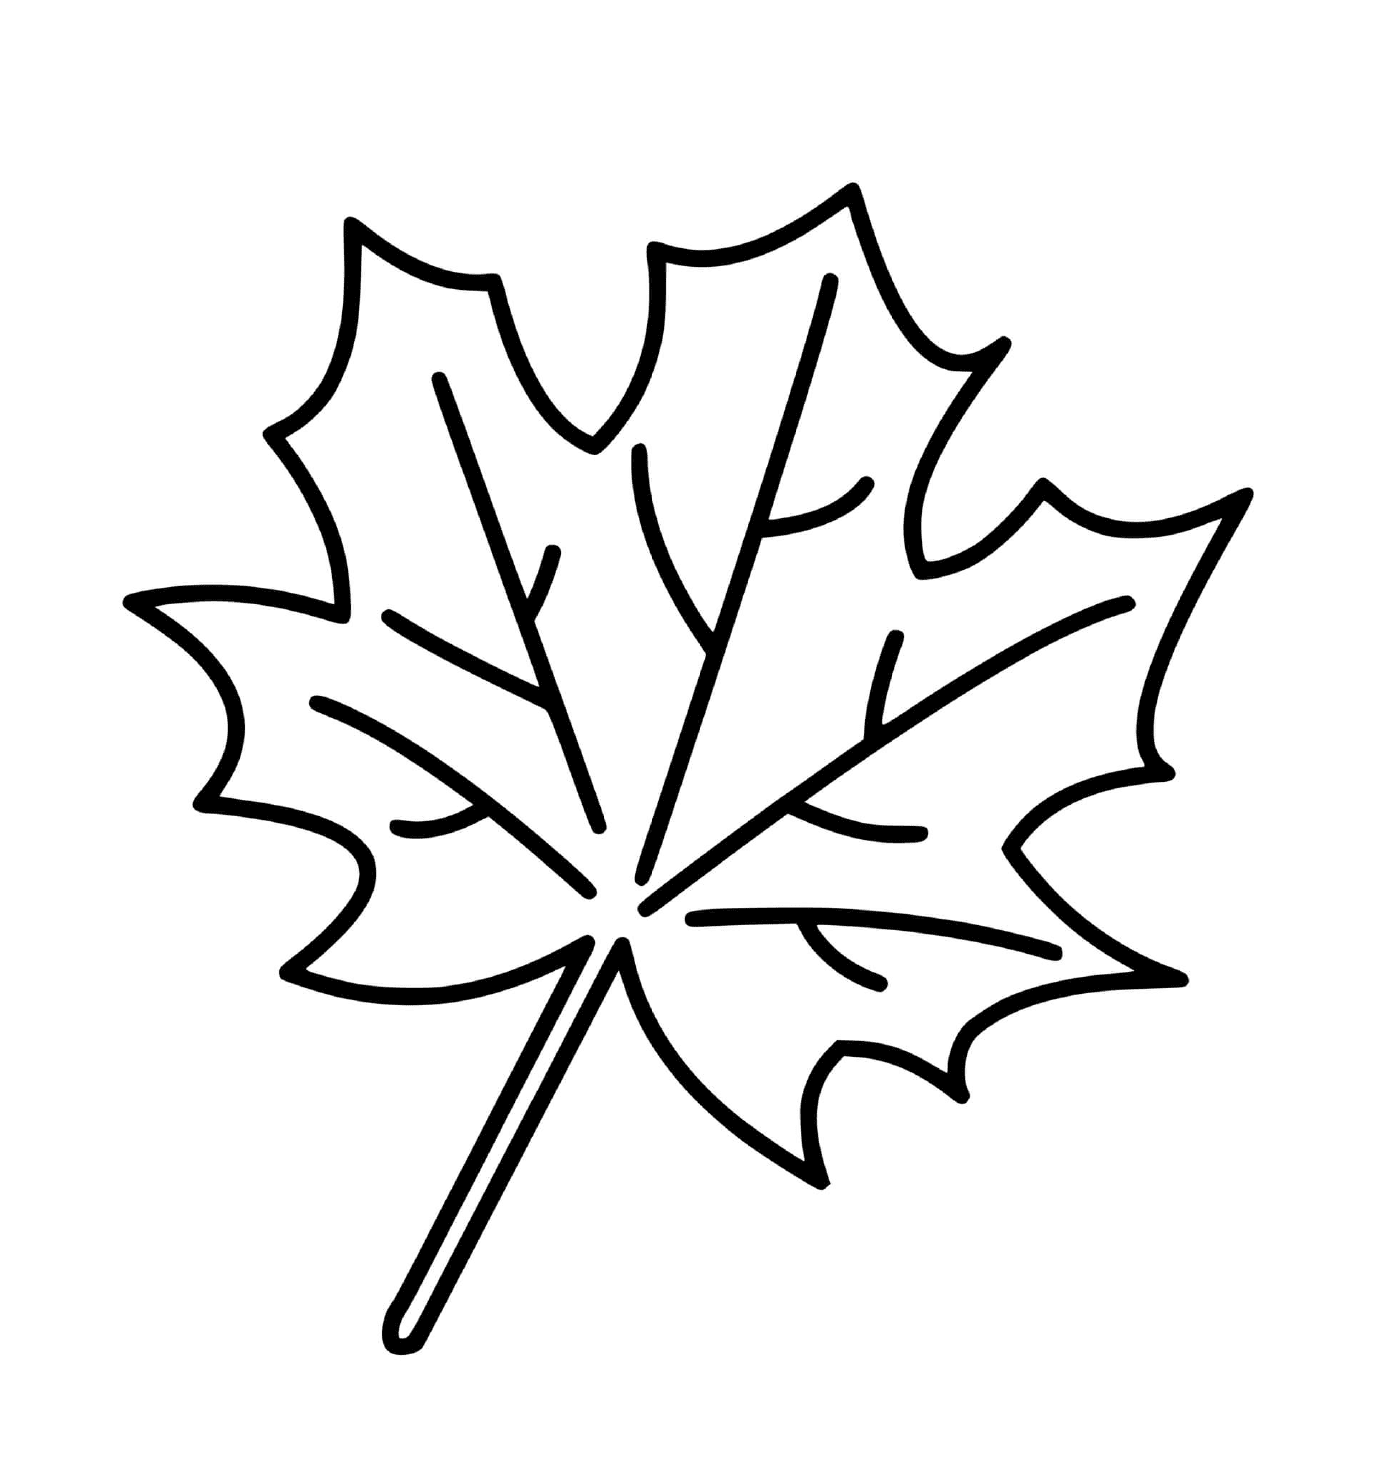  Easy maple leaf 